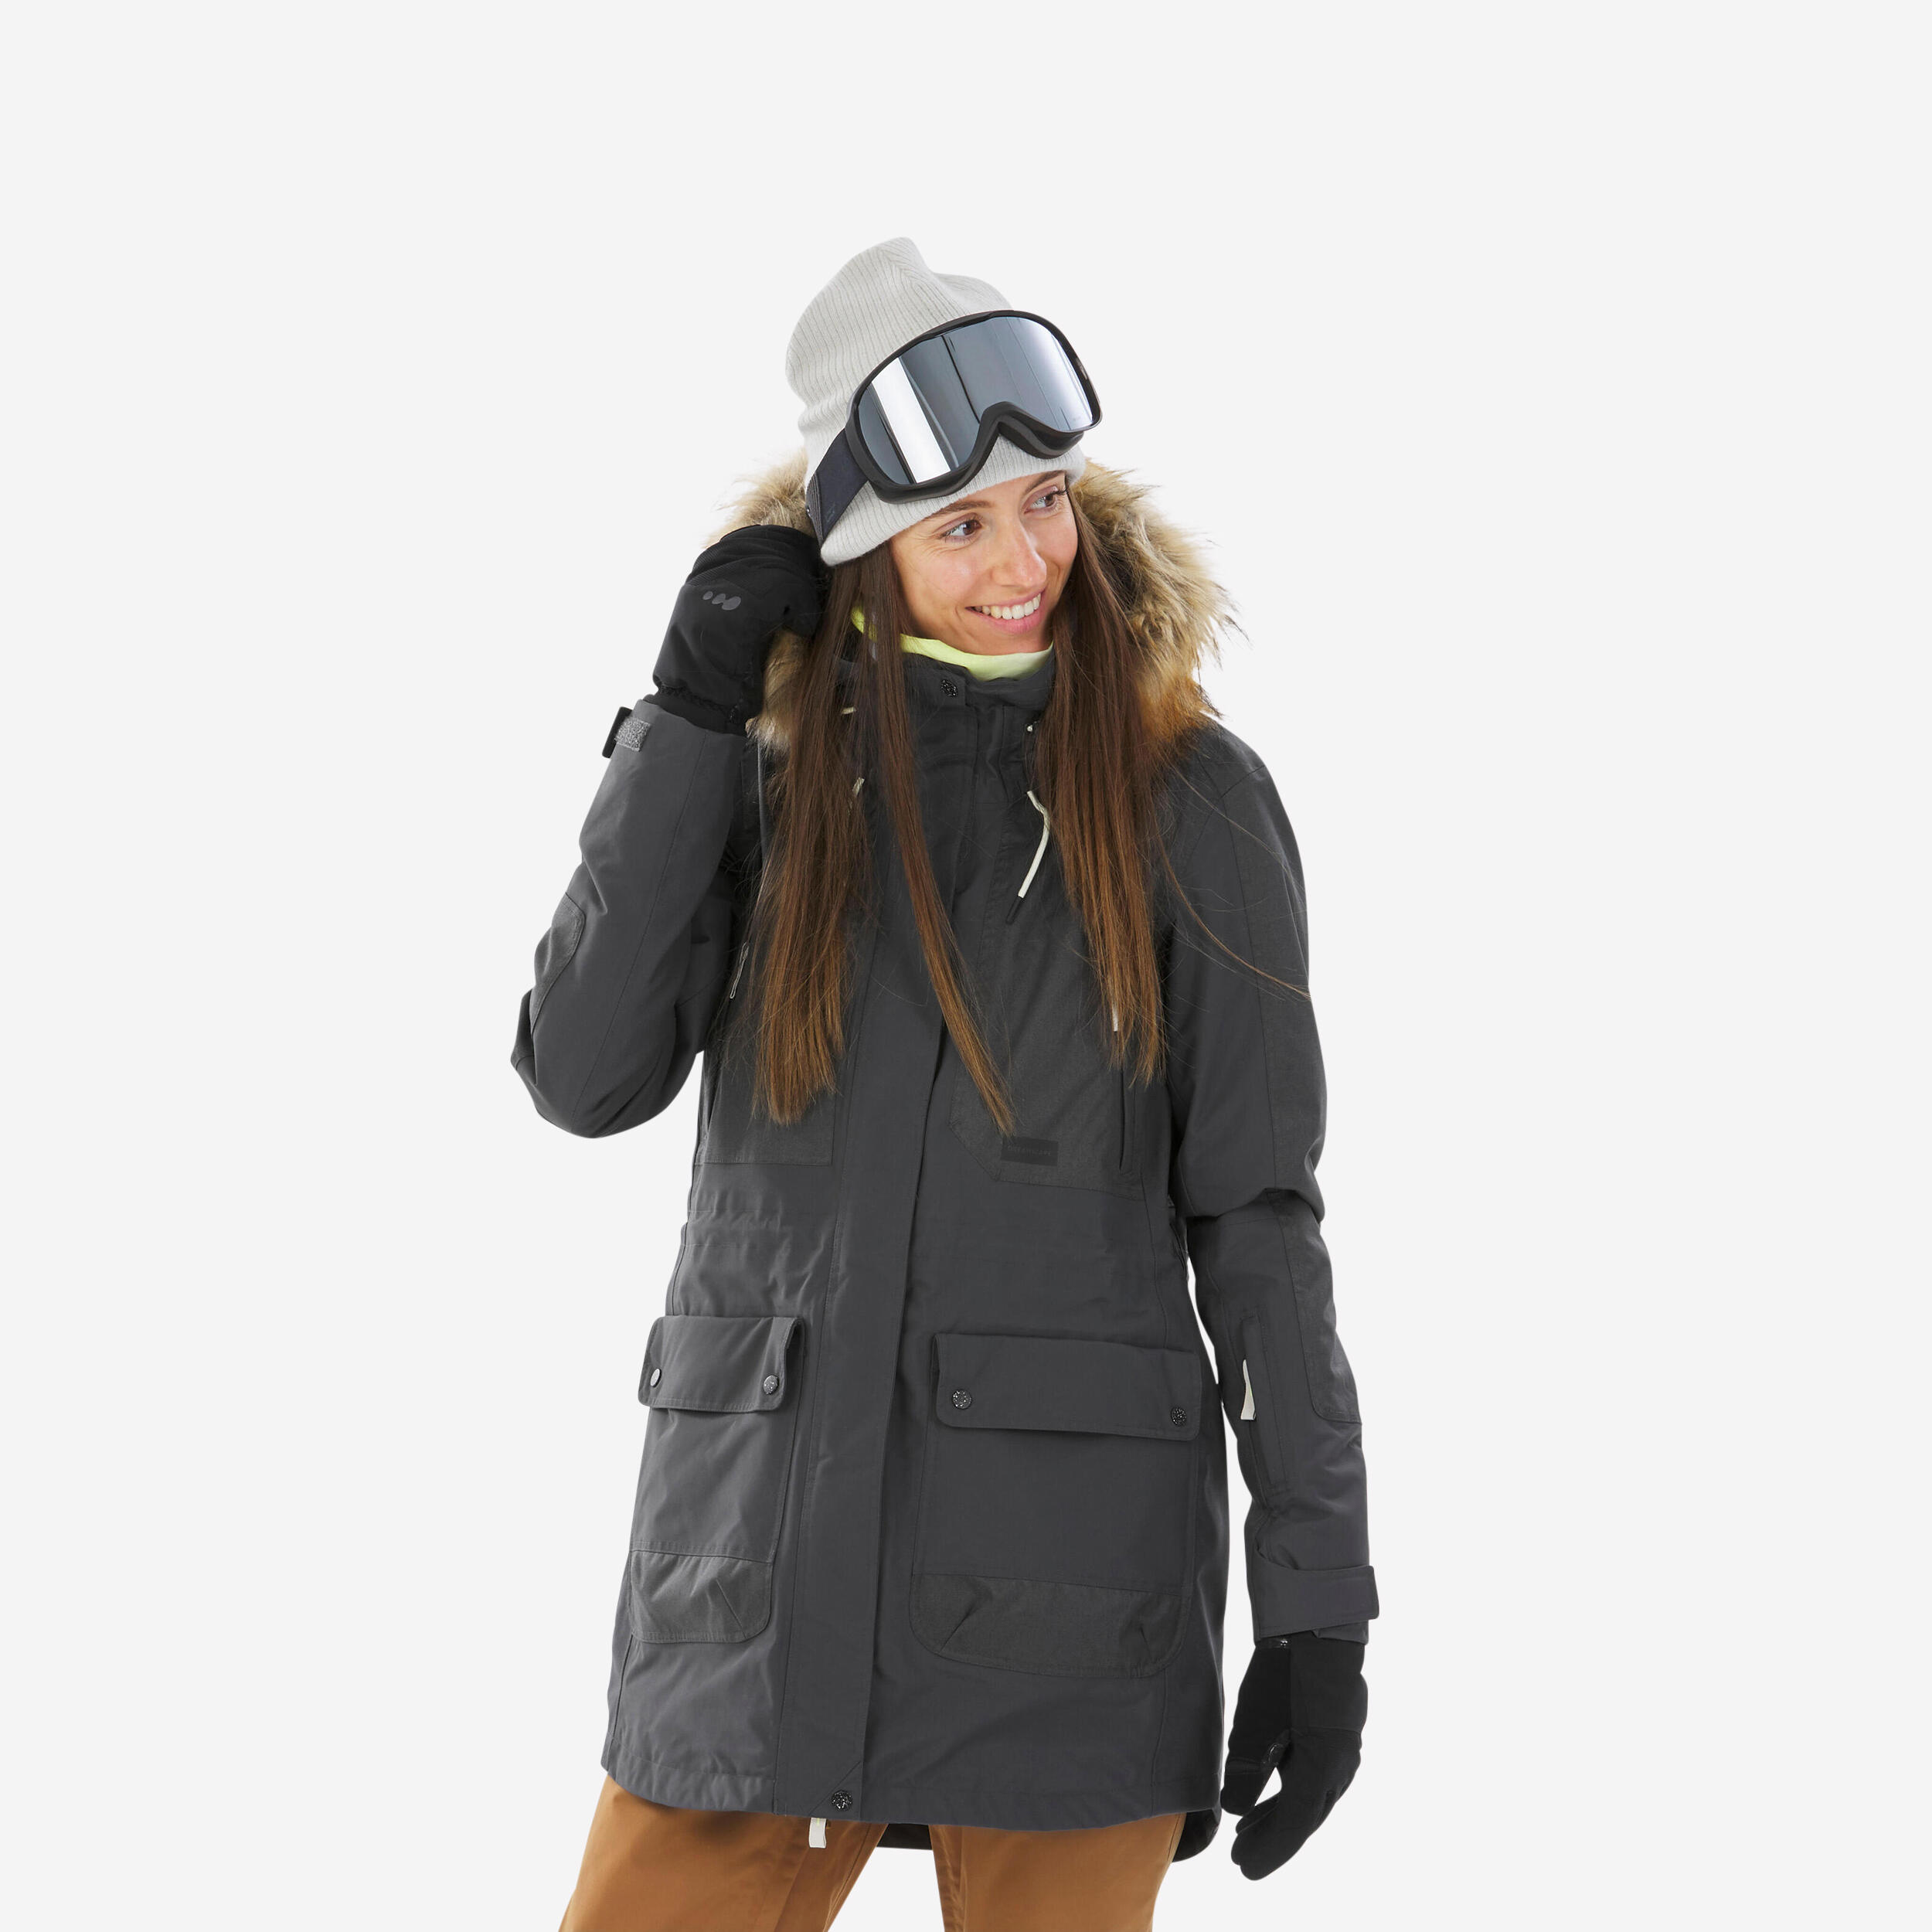 Image of Women’s Snowboard Jacket - SNB 500 Grey